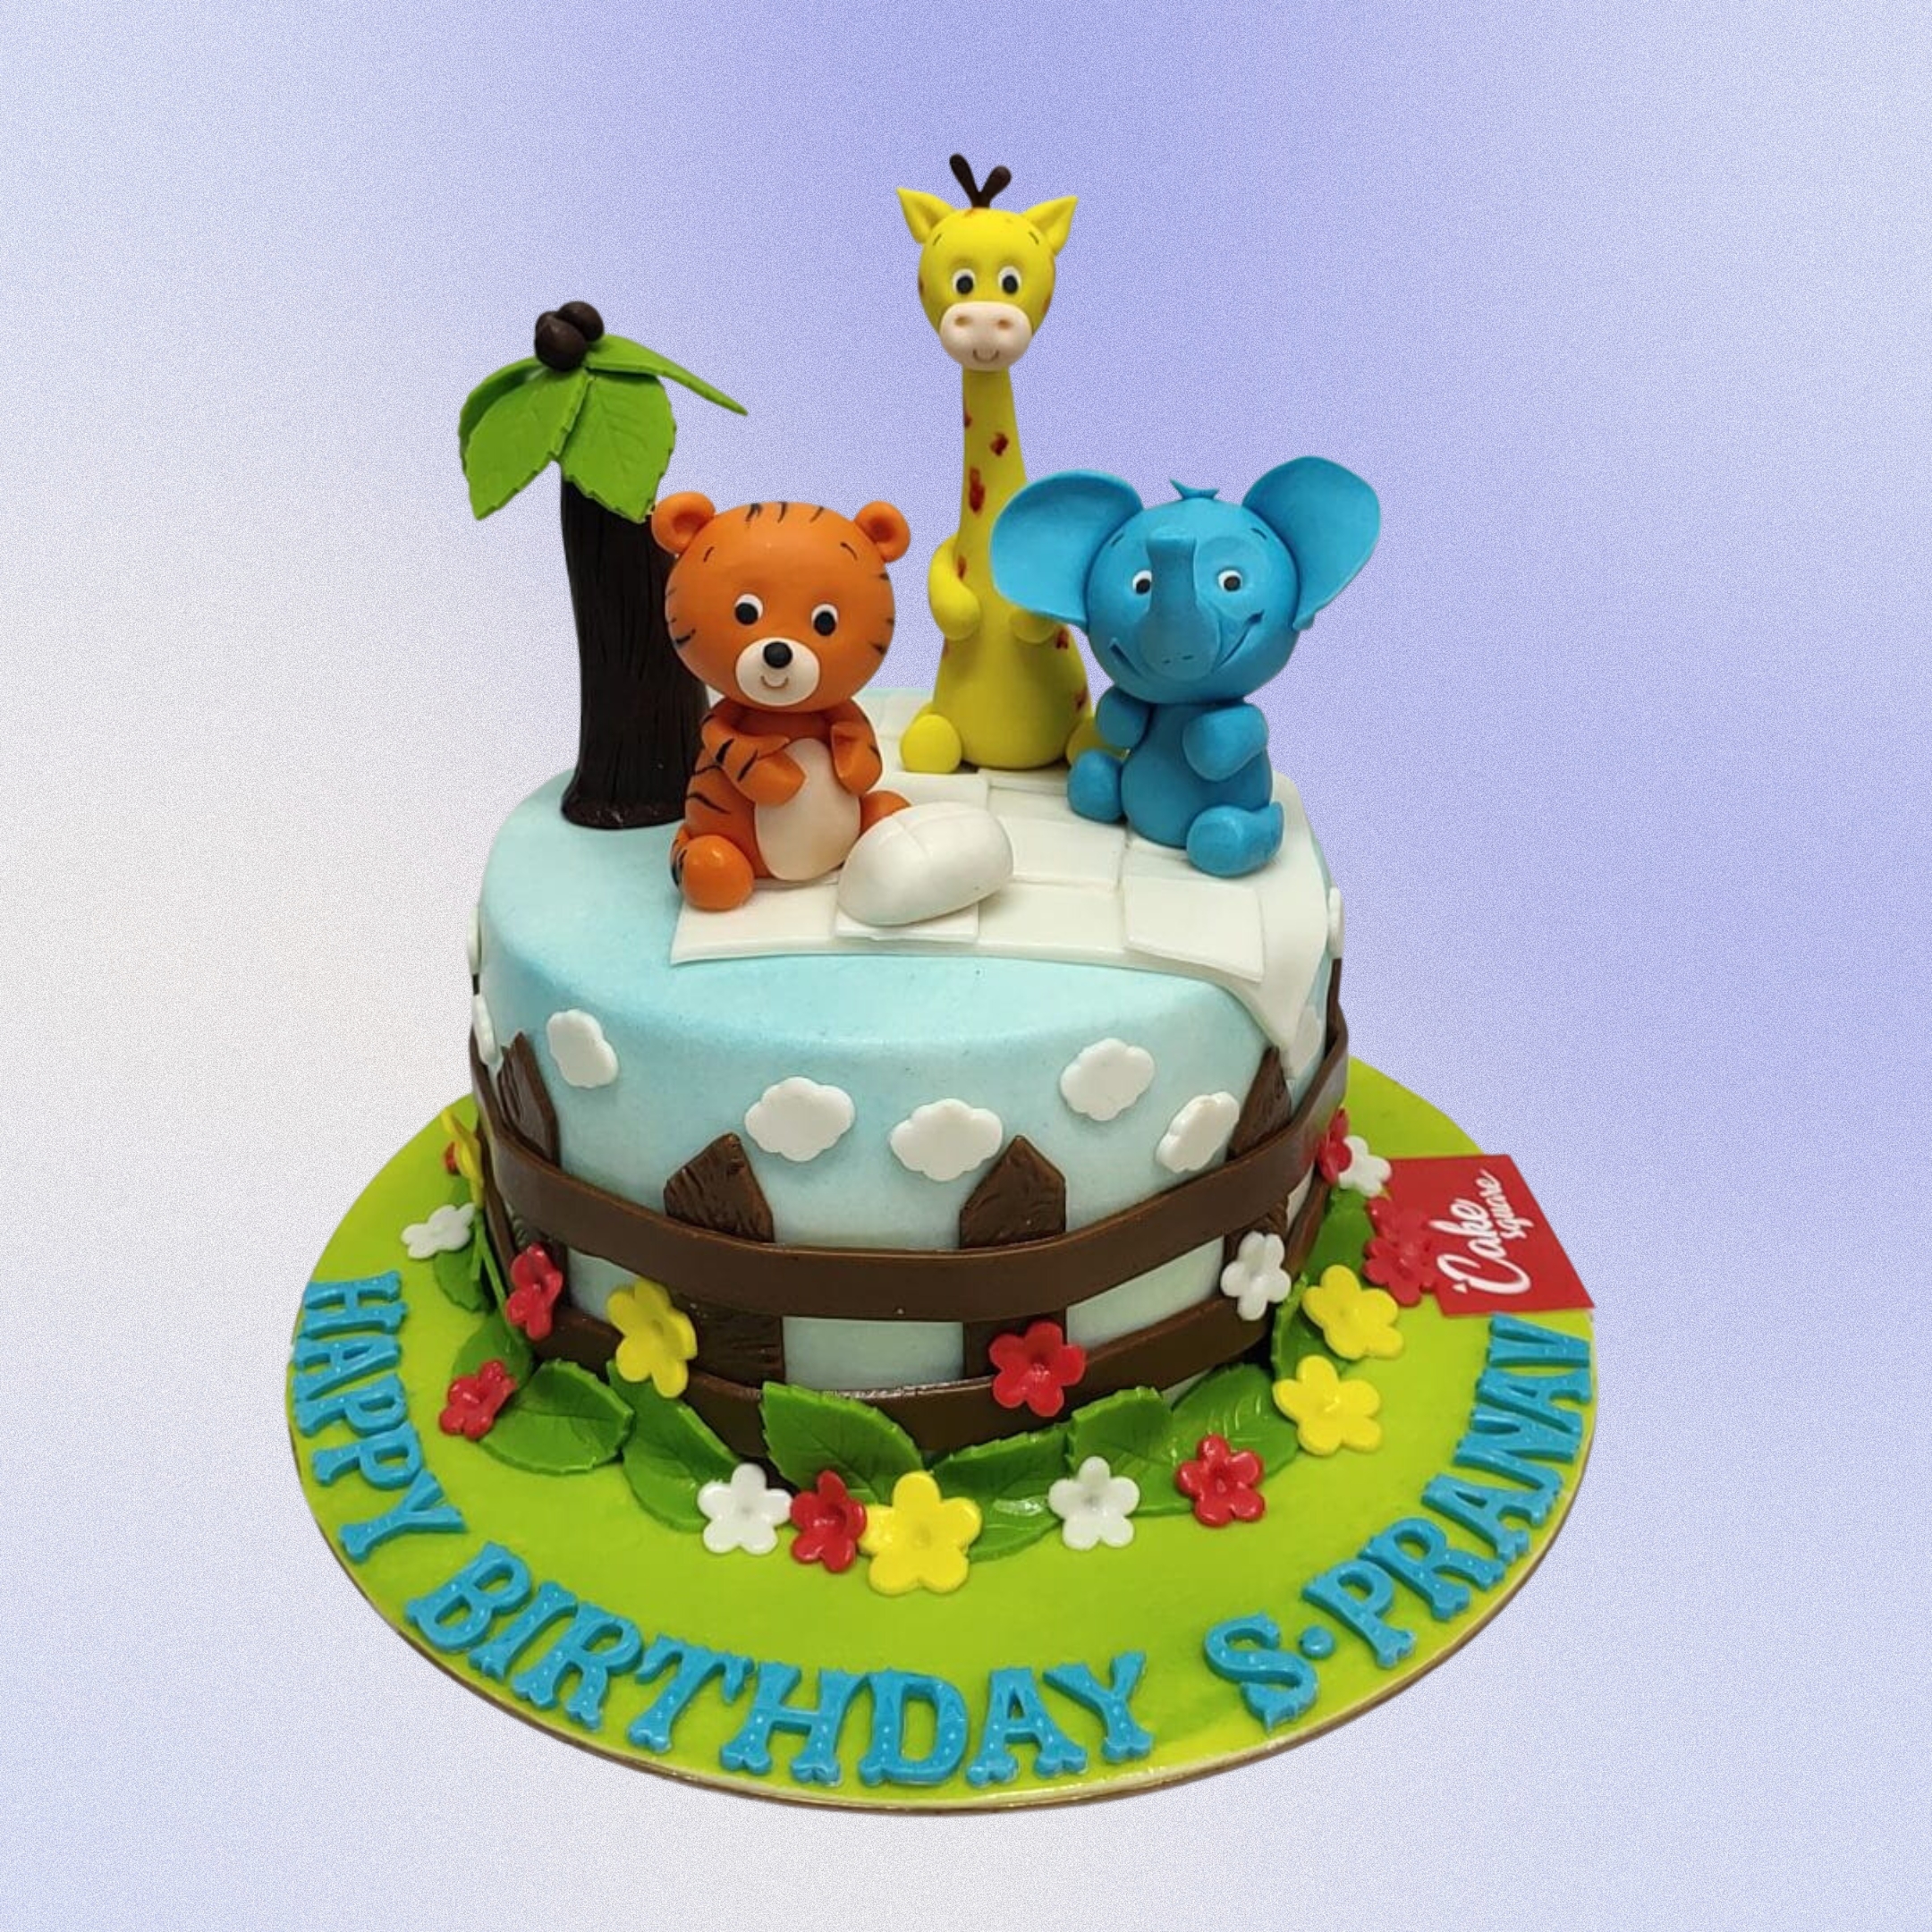 Preserve 184+ kids birthday cakes